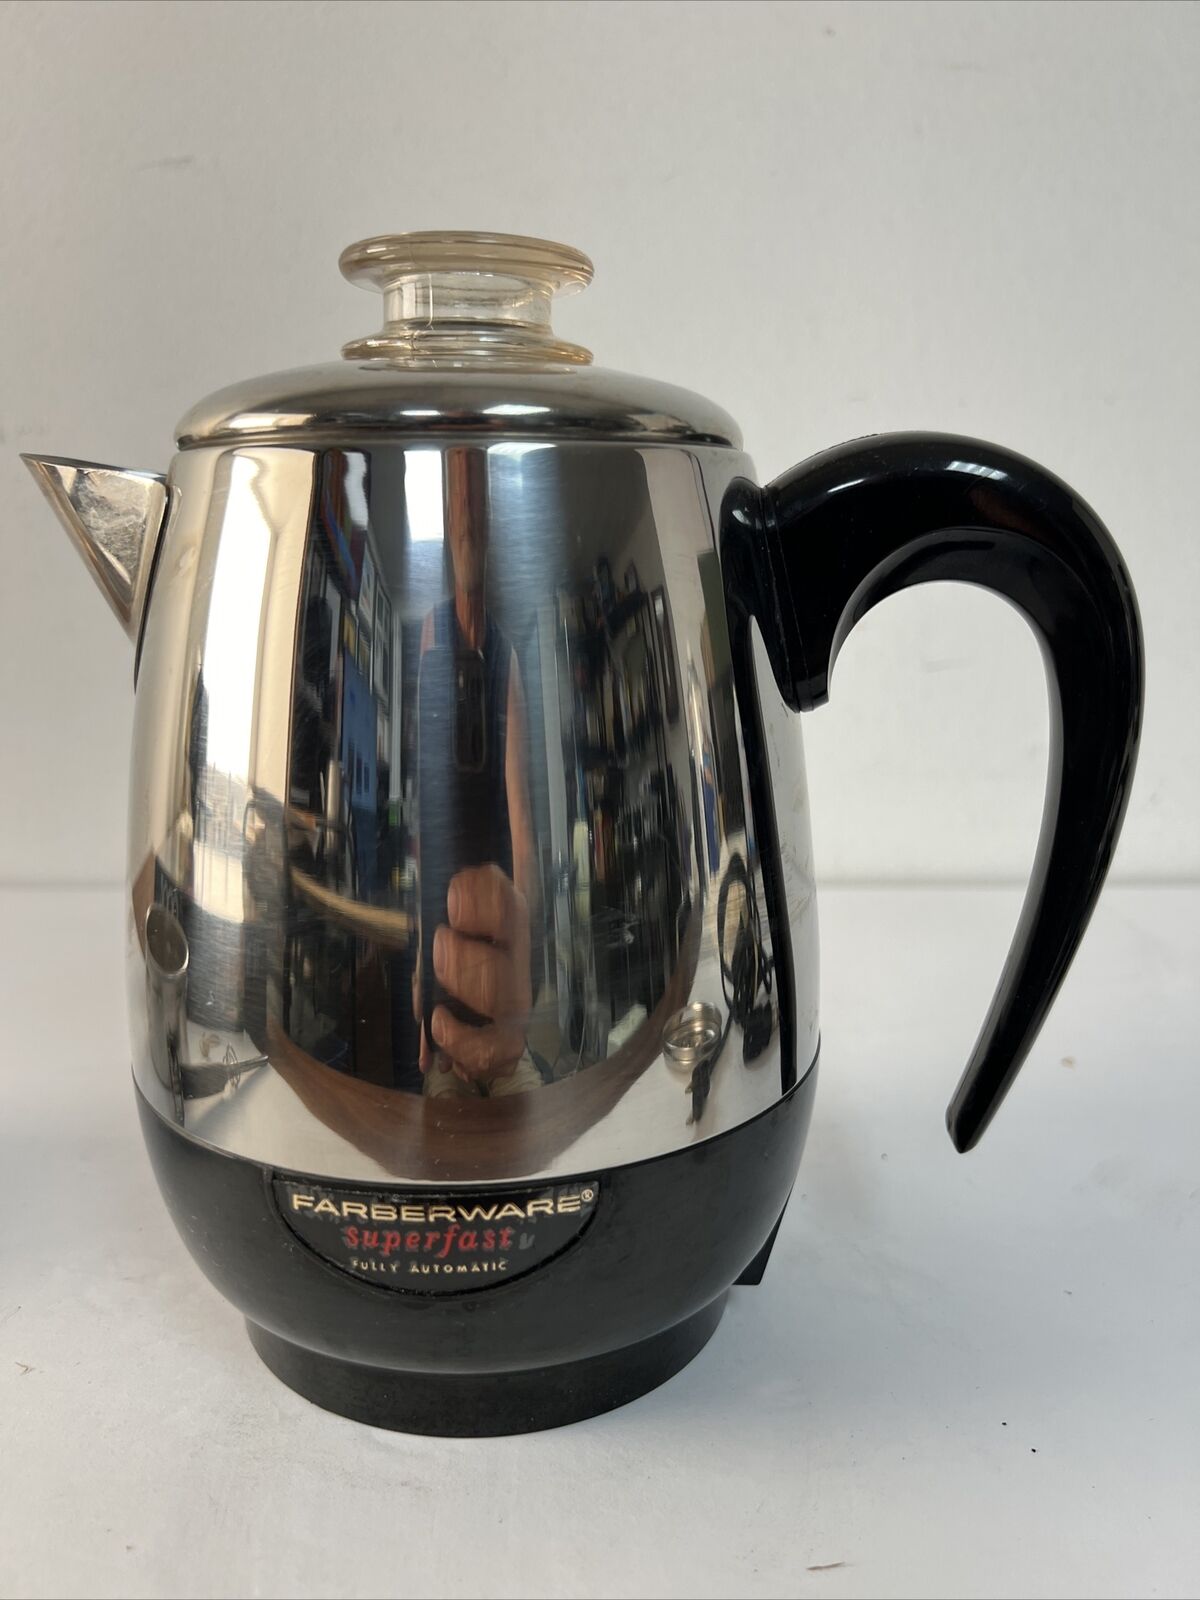 Farberware Superfast Electric Coffee Percolator 2-4 Cup Model 134 WORKS vtg USA